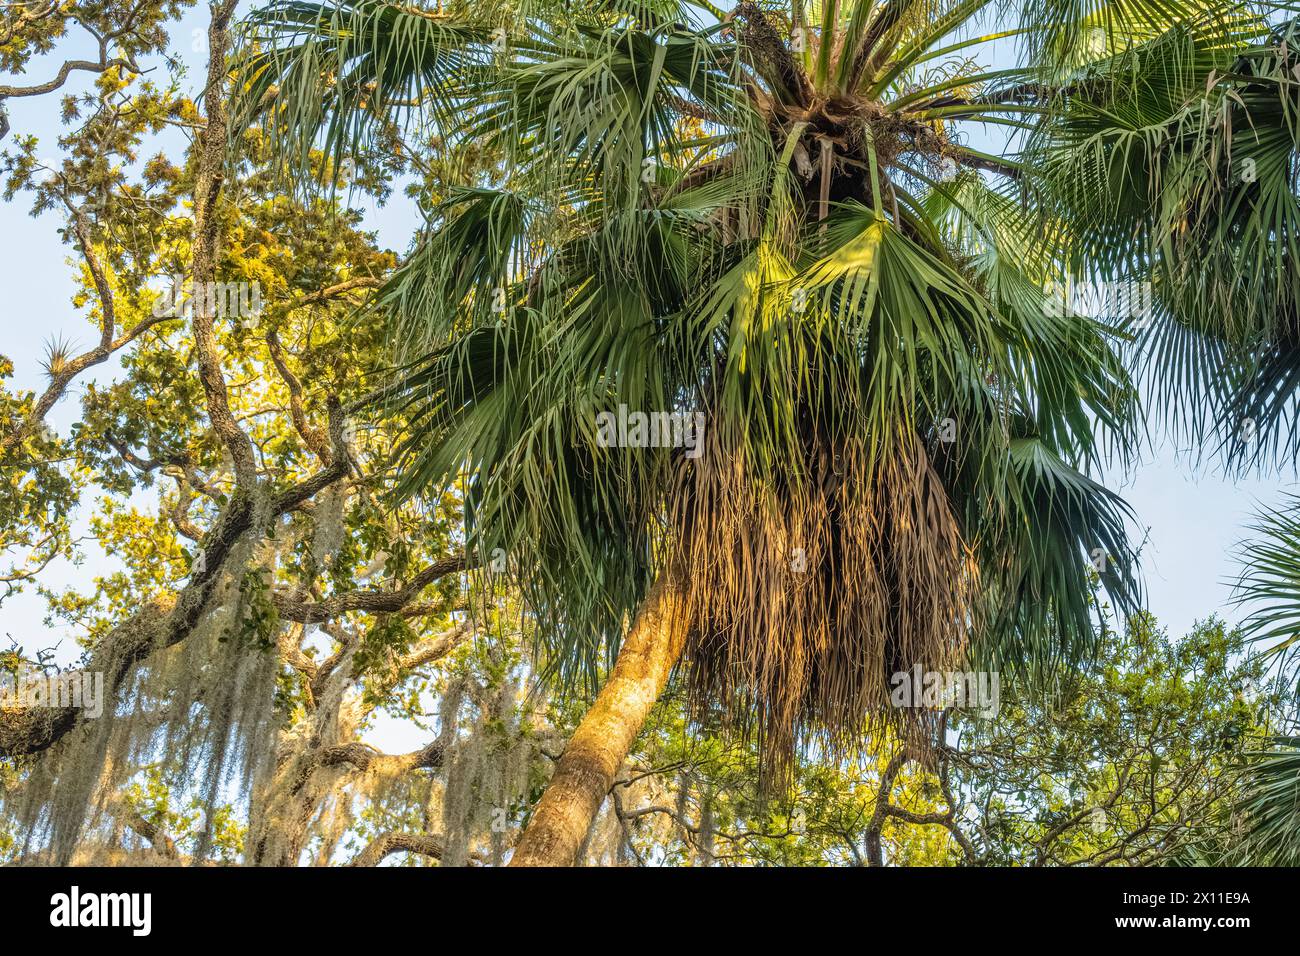 Sabal Palmetto, lebende Eichen und spanisches Moos im Washington Oaks Gardens State Park entlang der A1A Scenic & Historic Coastal Byway in Palm Coast, FL. (USA) Stockfoto